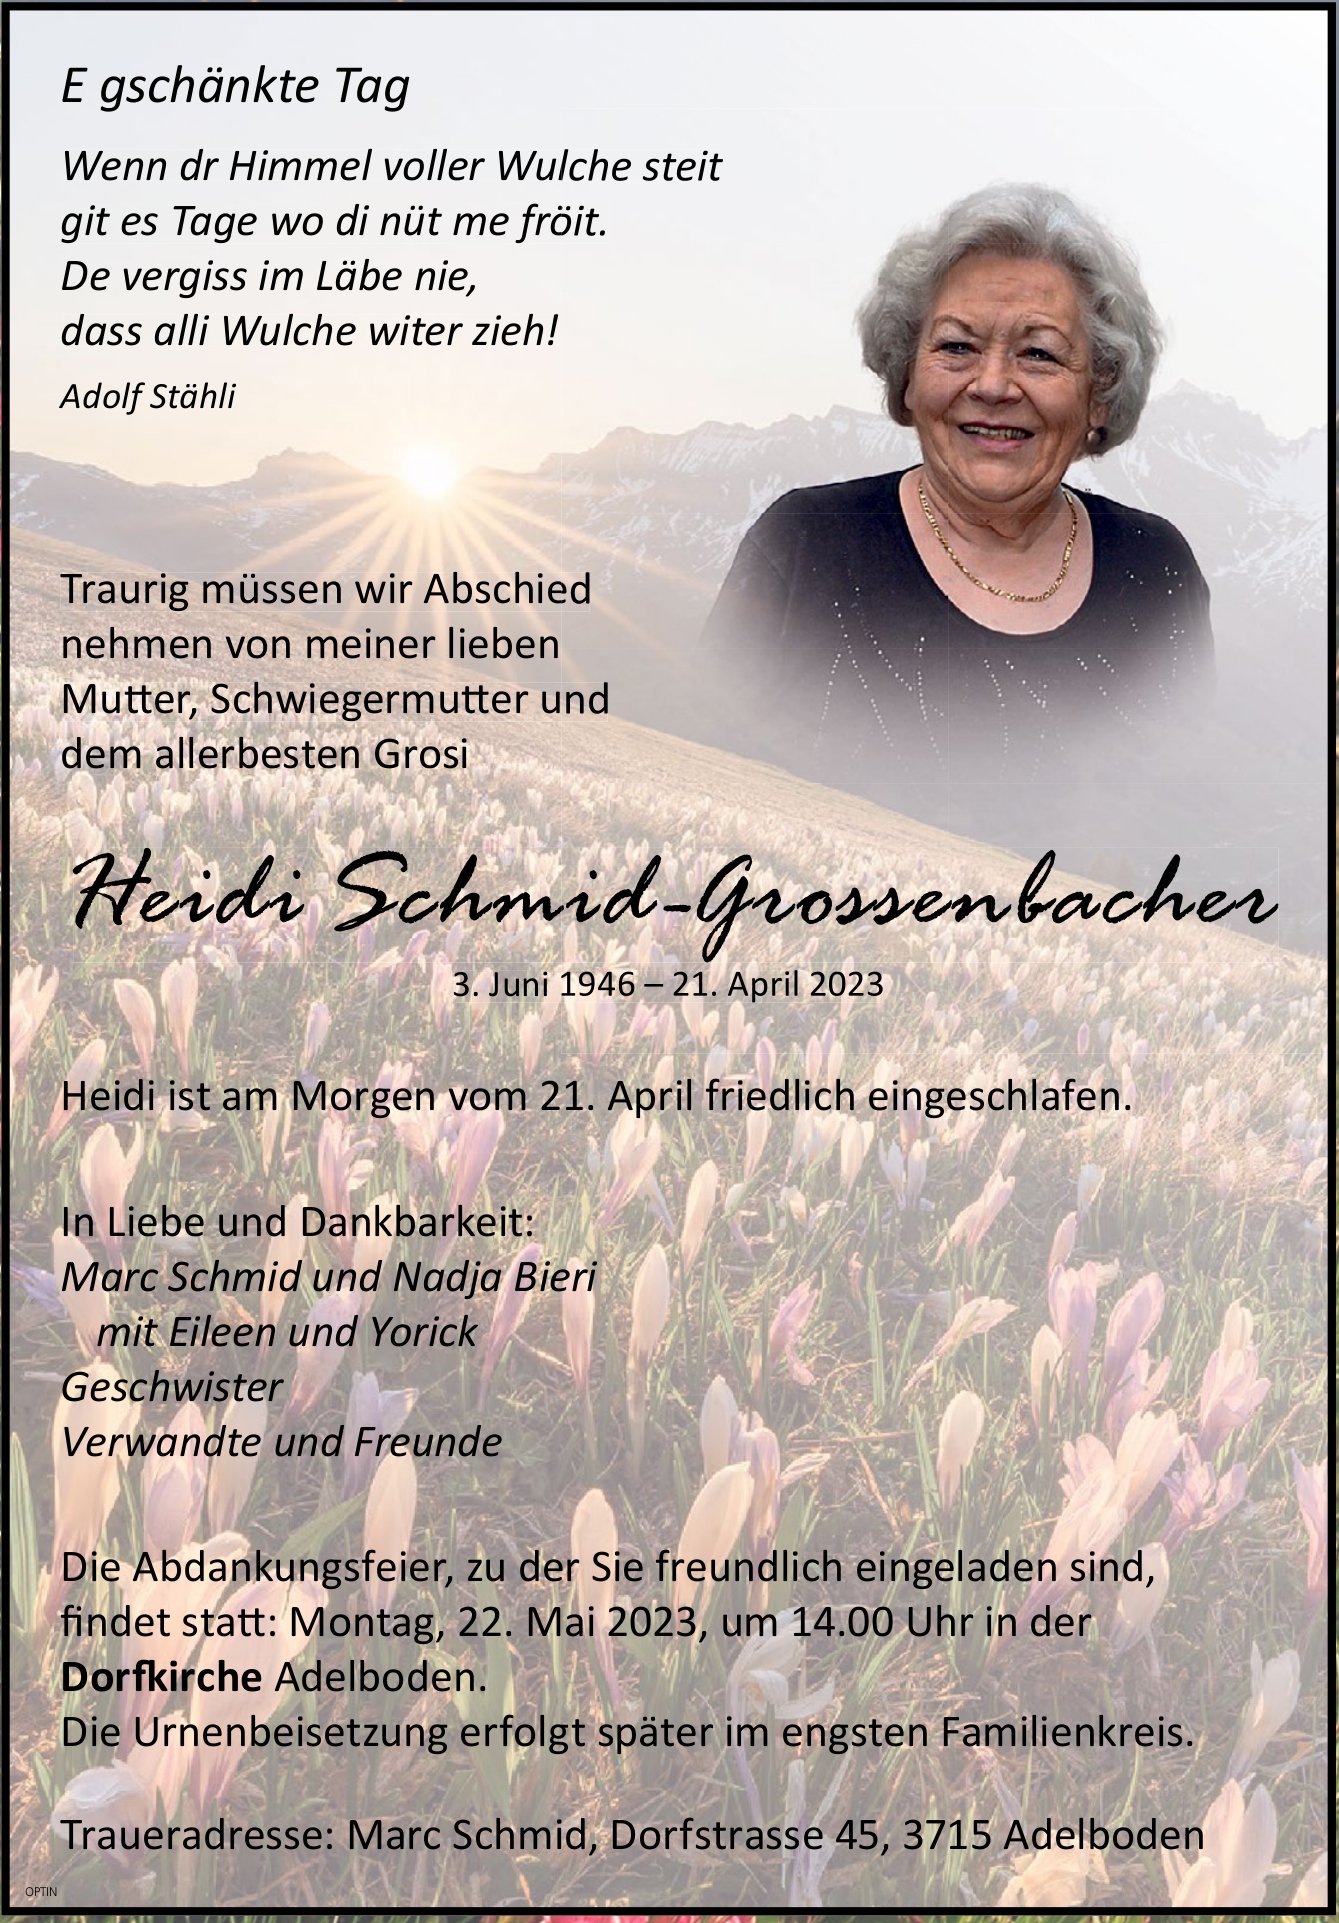 Heidi Schmid-Grossenbacher, April 2023 / TA